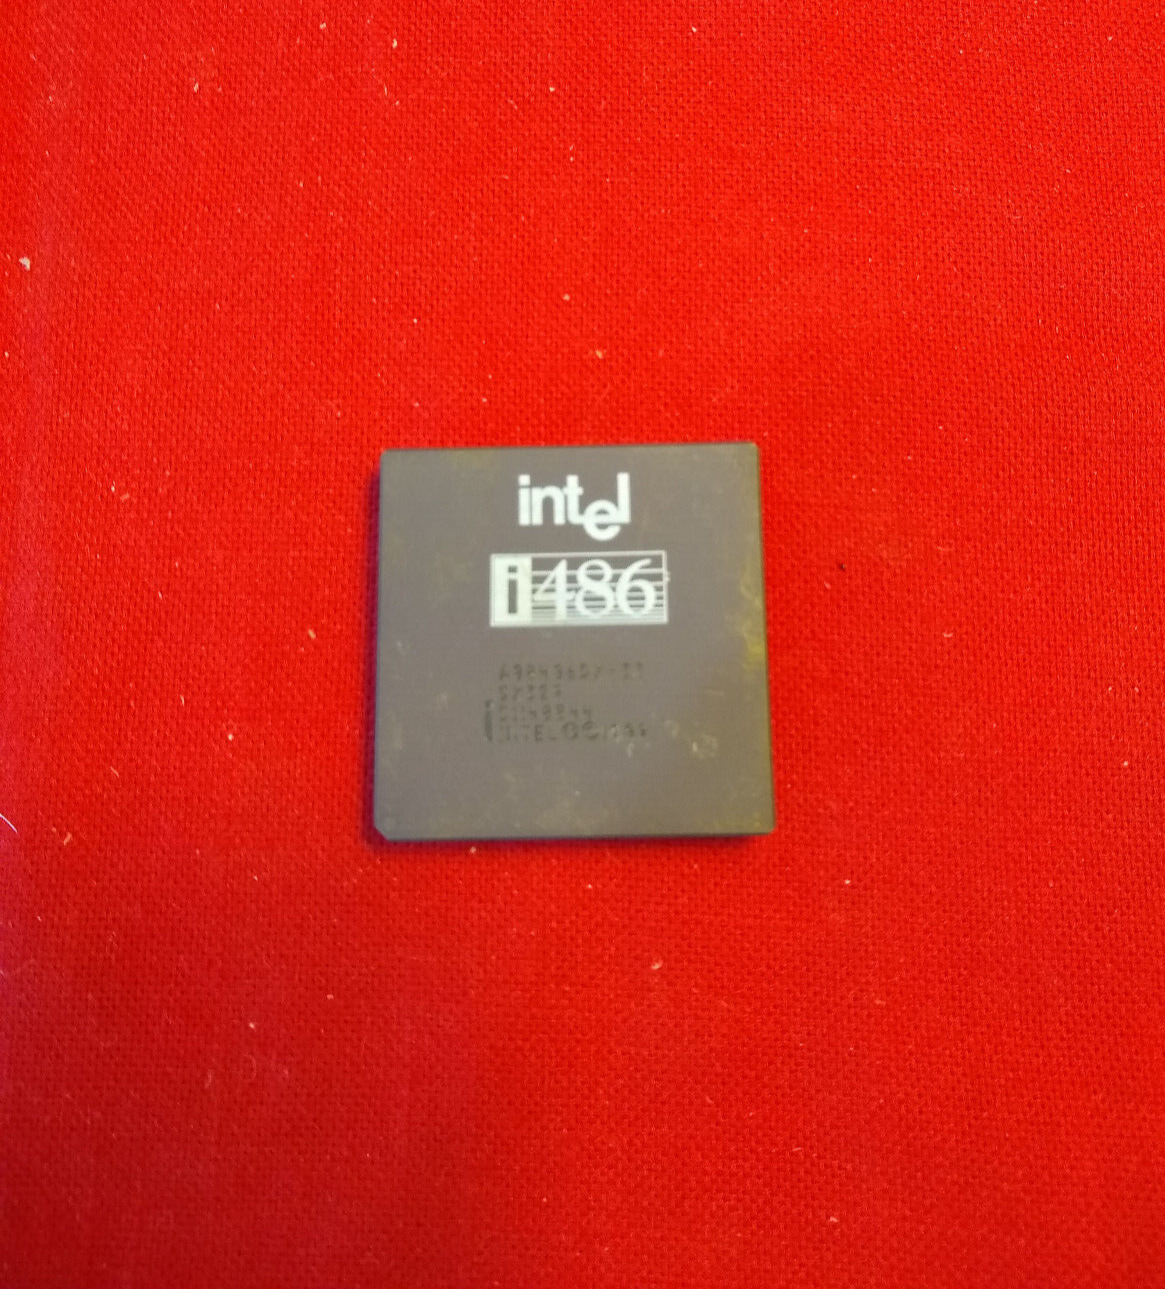 Intel 486DX-33 A80486DX-33 SX419 Socket 3 486DX 33 MHz ✅ Rare i486 LABEL - LOGO